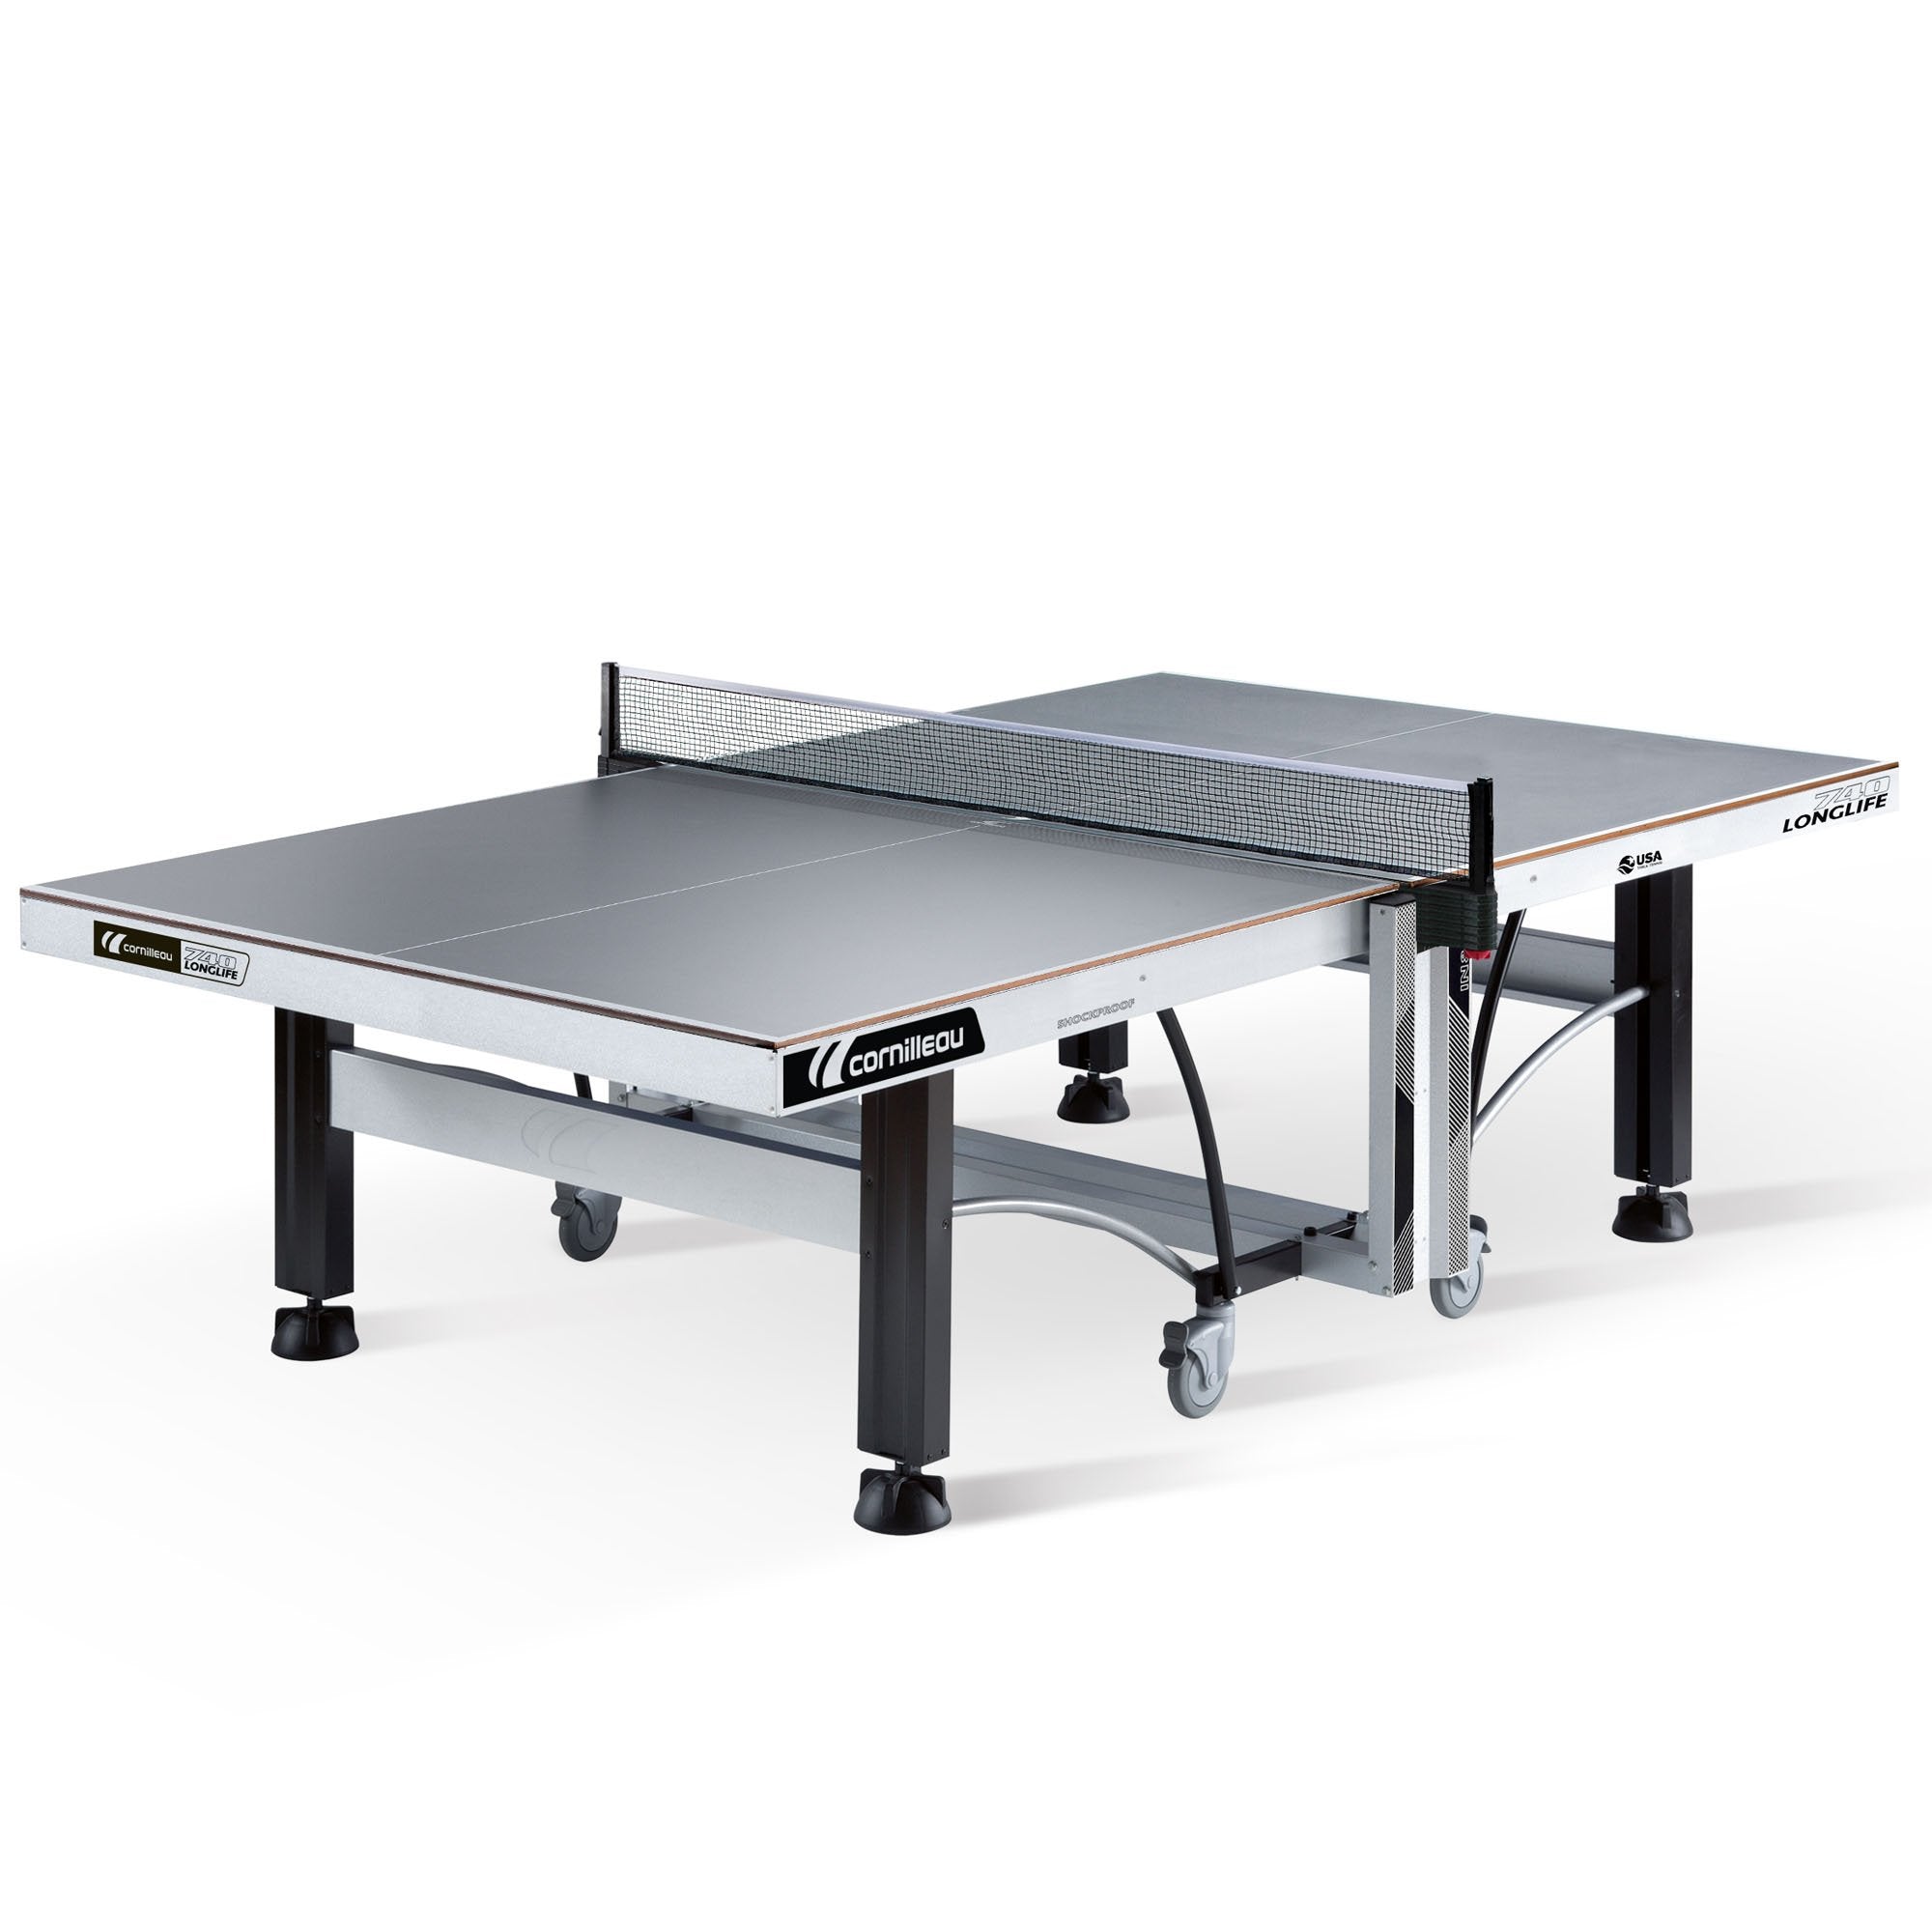 Cornilleau 740 Pro Longlife Outdoor Table Tennis Table